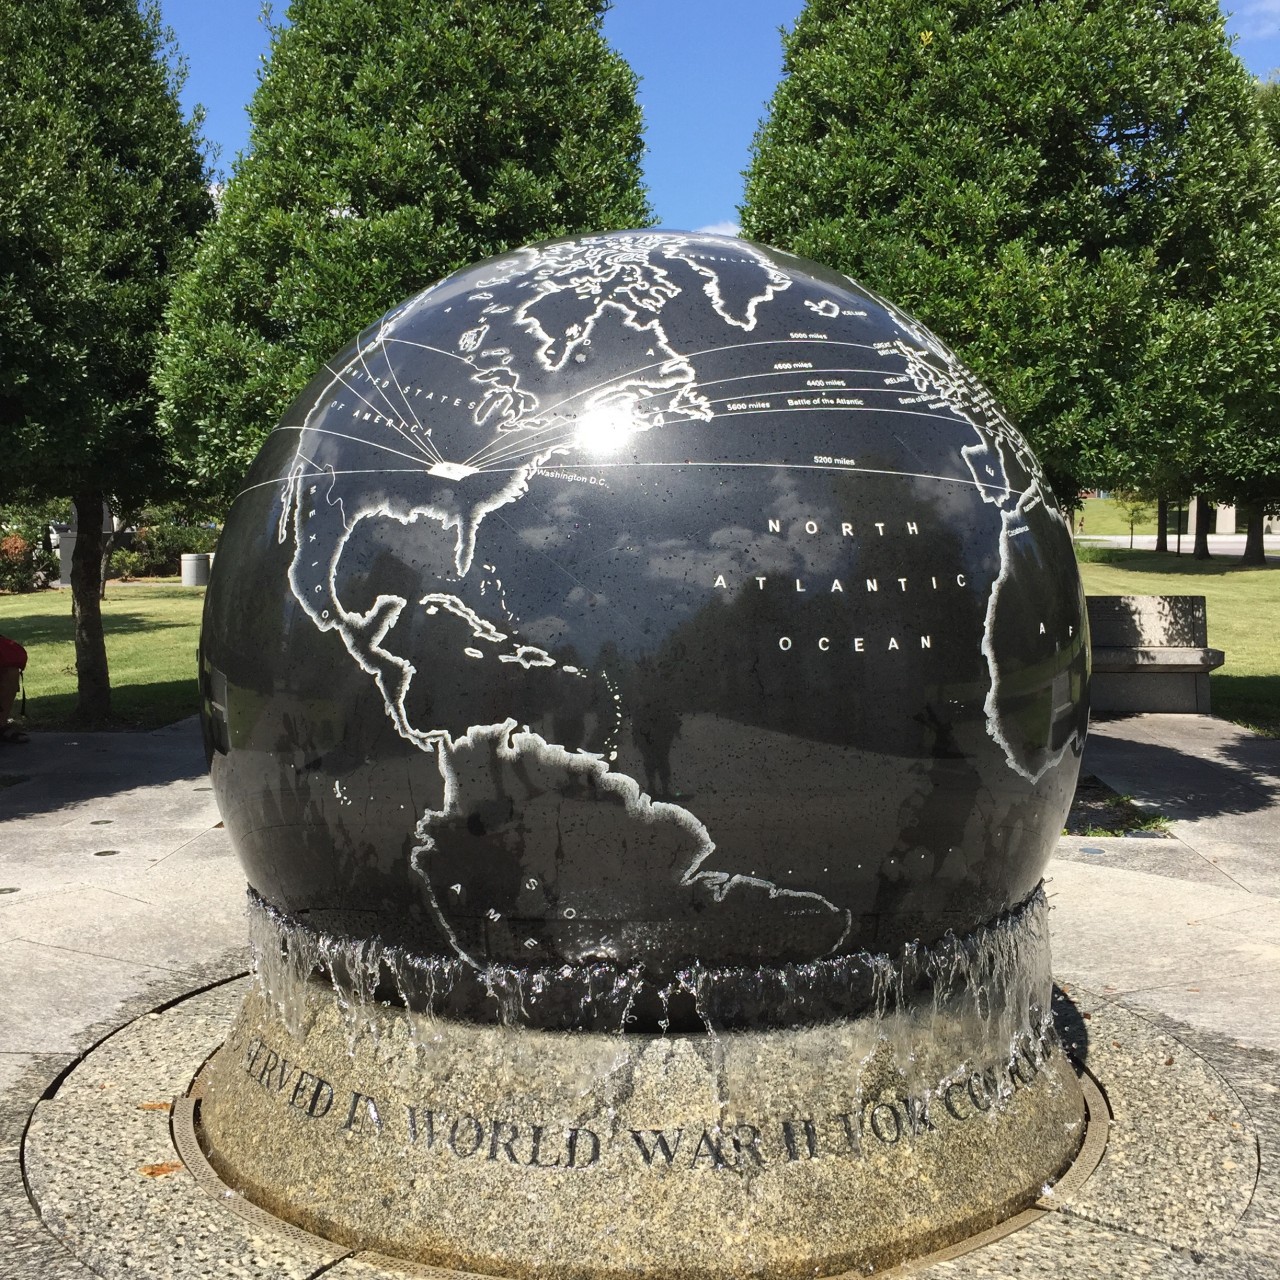 Nashville_globe_bicentennialpark